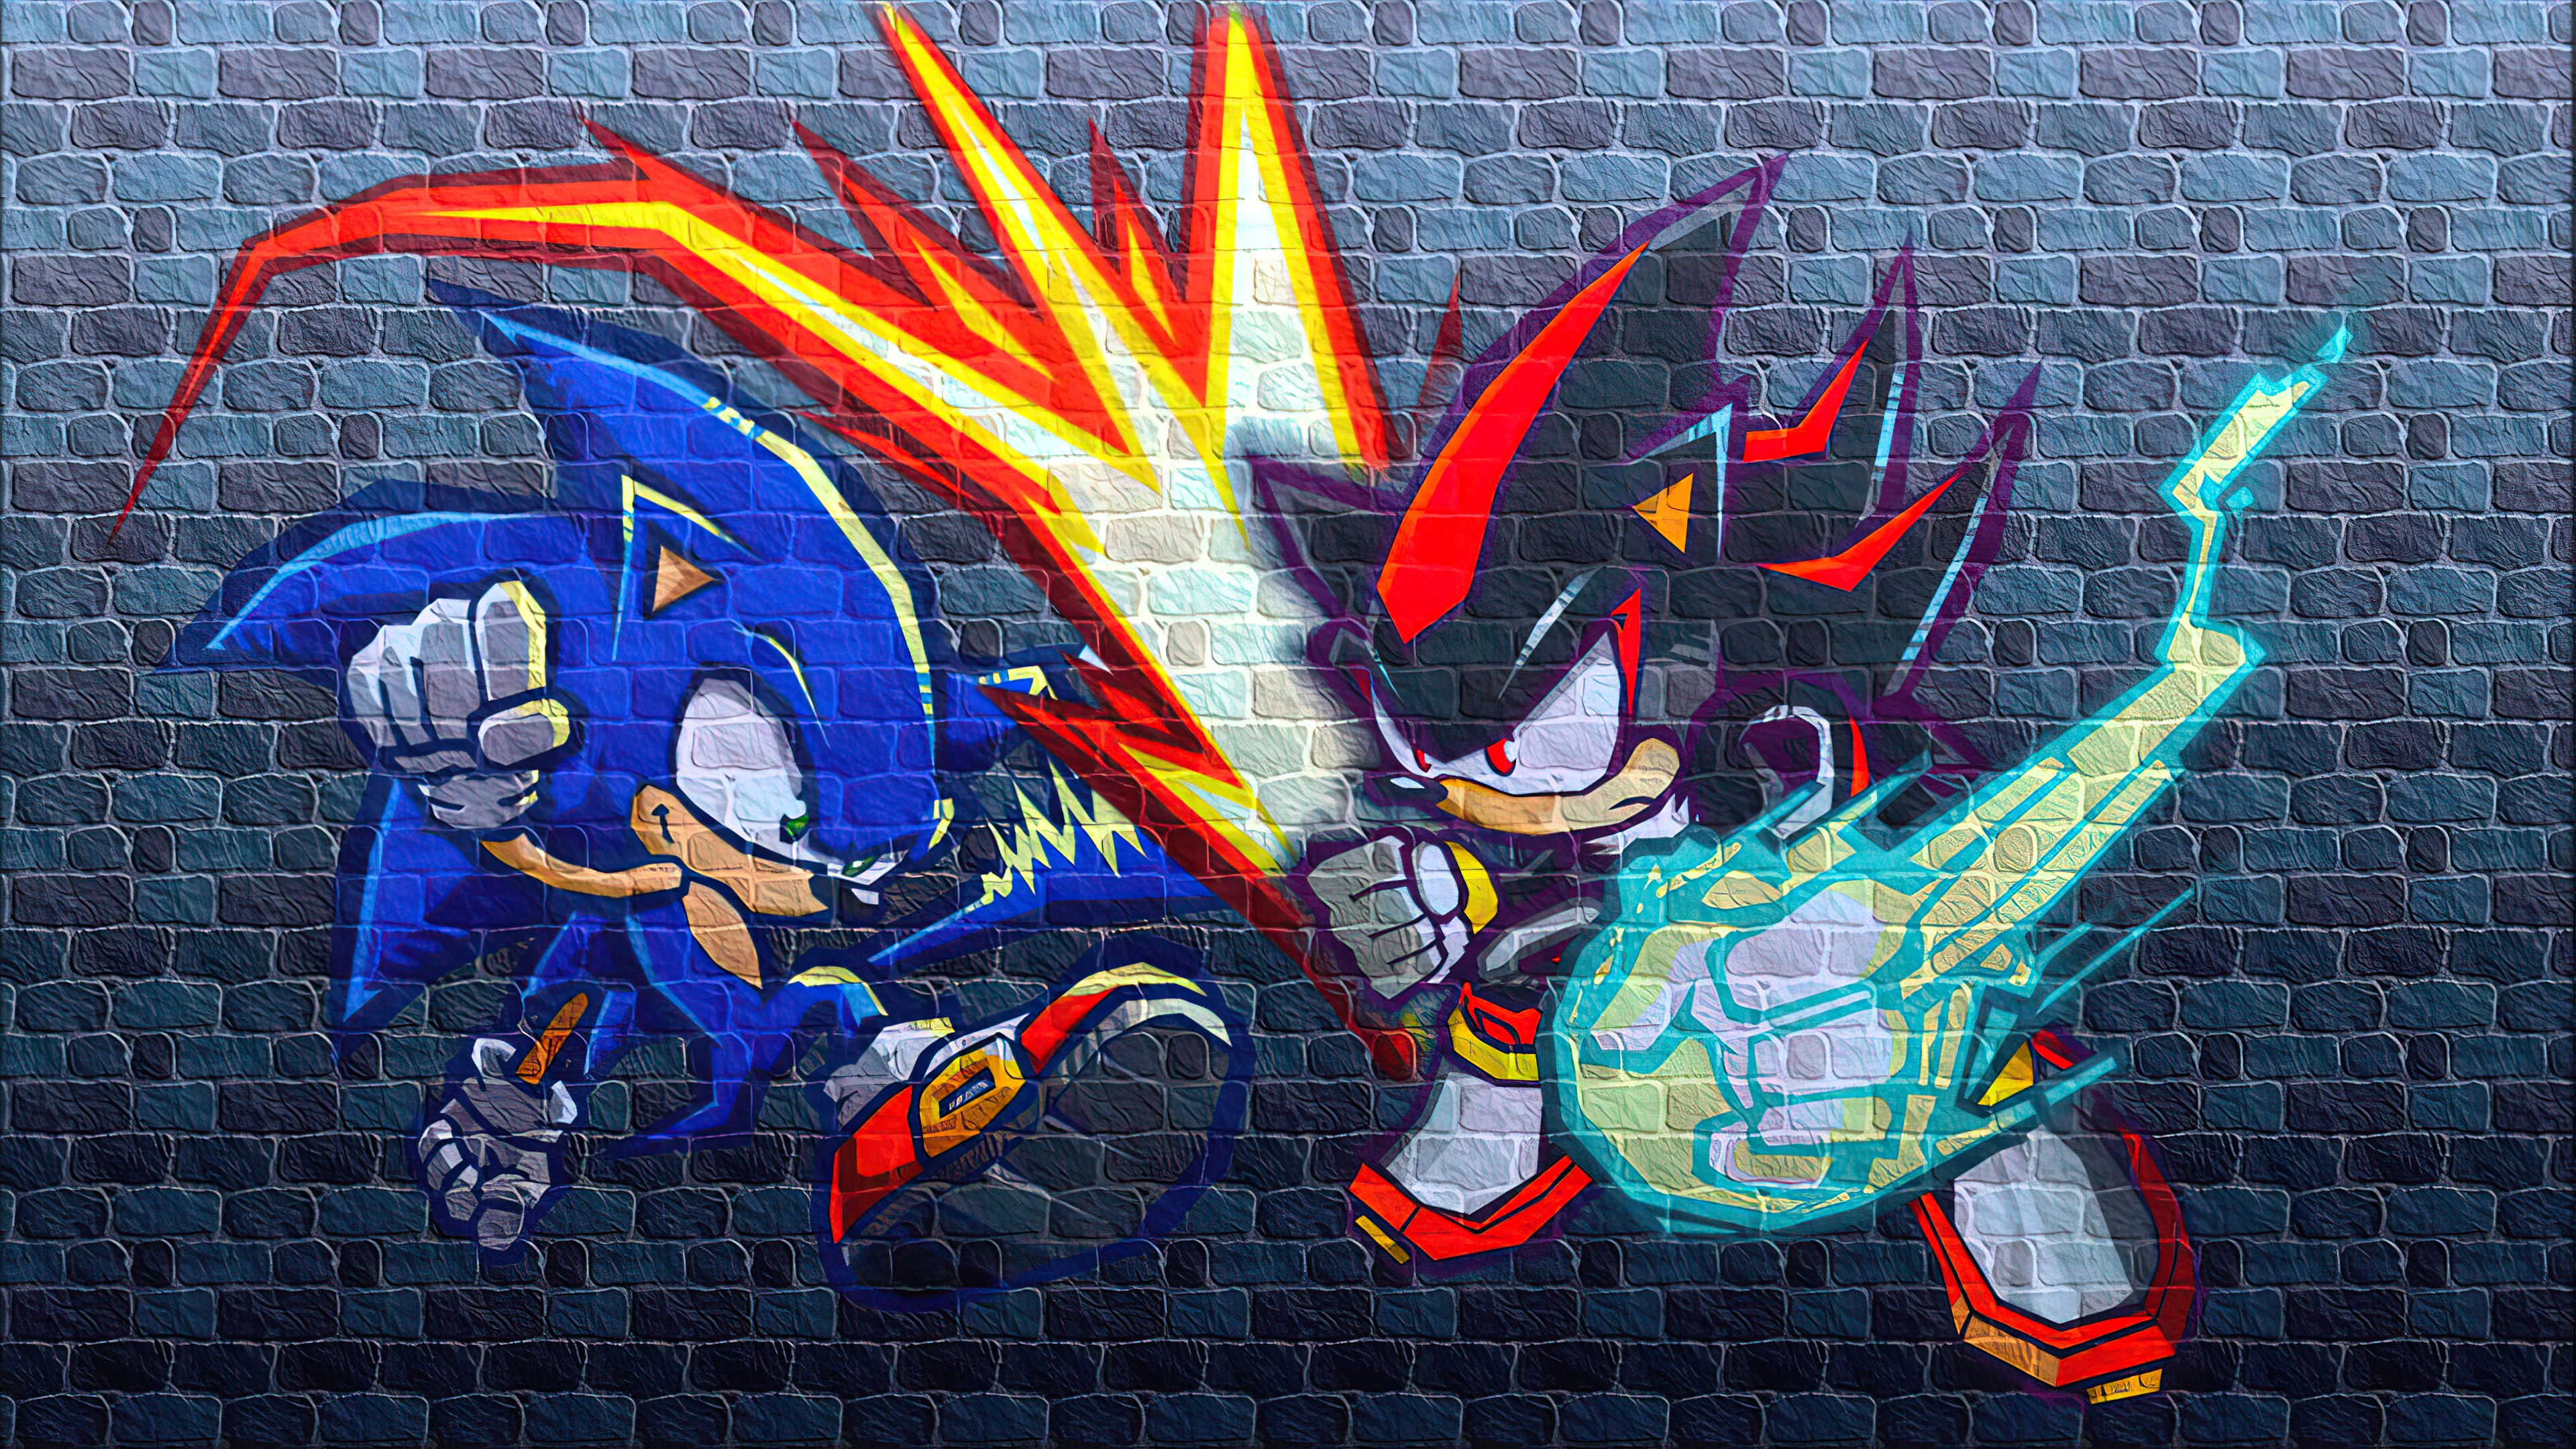 General 3840x2160 Sonic Sonic the Hedgehog sonic adventure 2 Shadow the Hedgehog video game art Sega video game characters PC gaming graffiti wall artwork